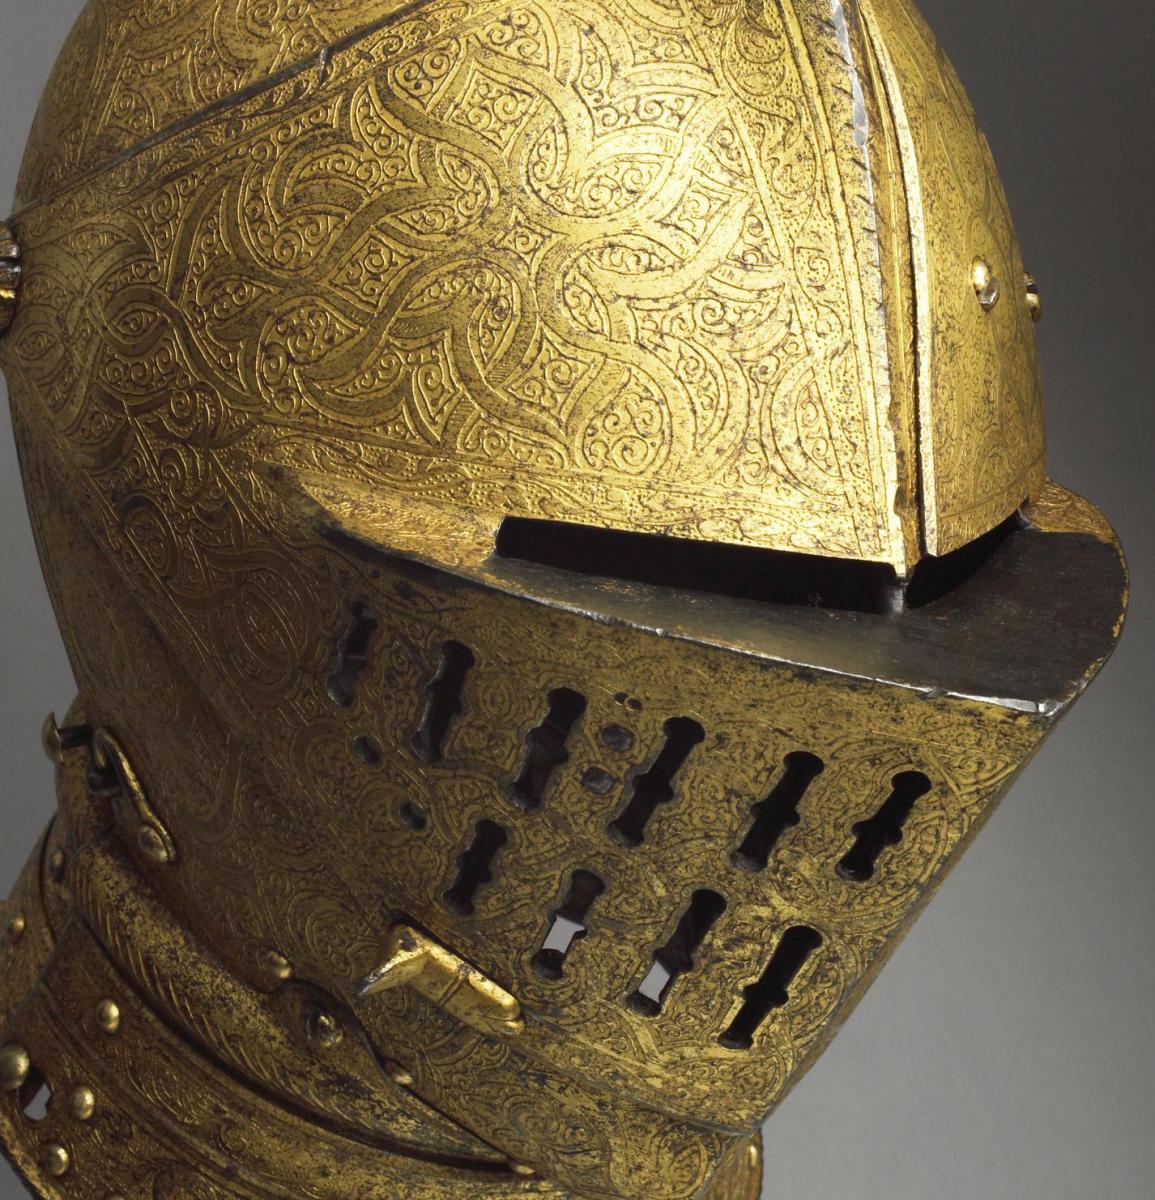 Milanese armour: between grotesque and simplicity